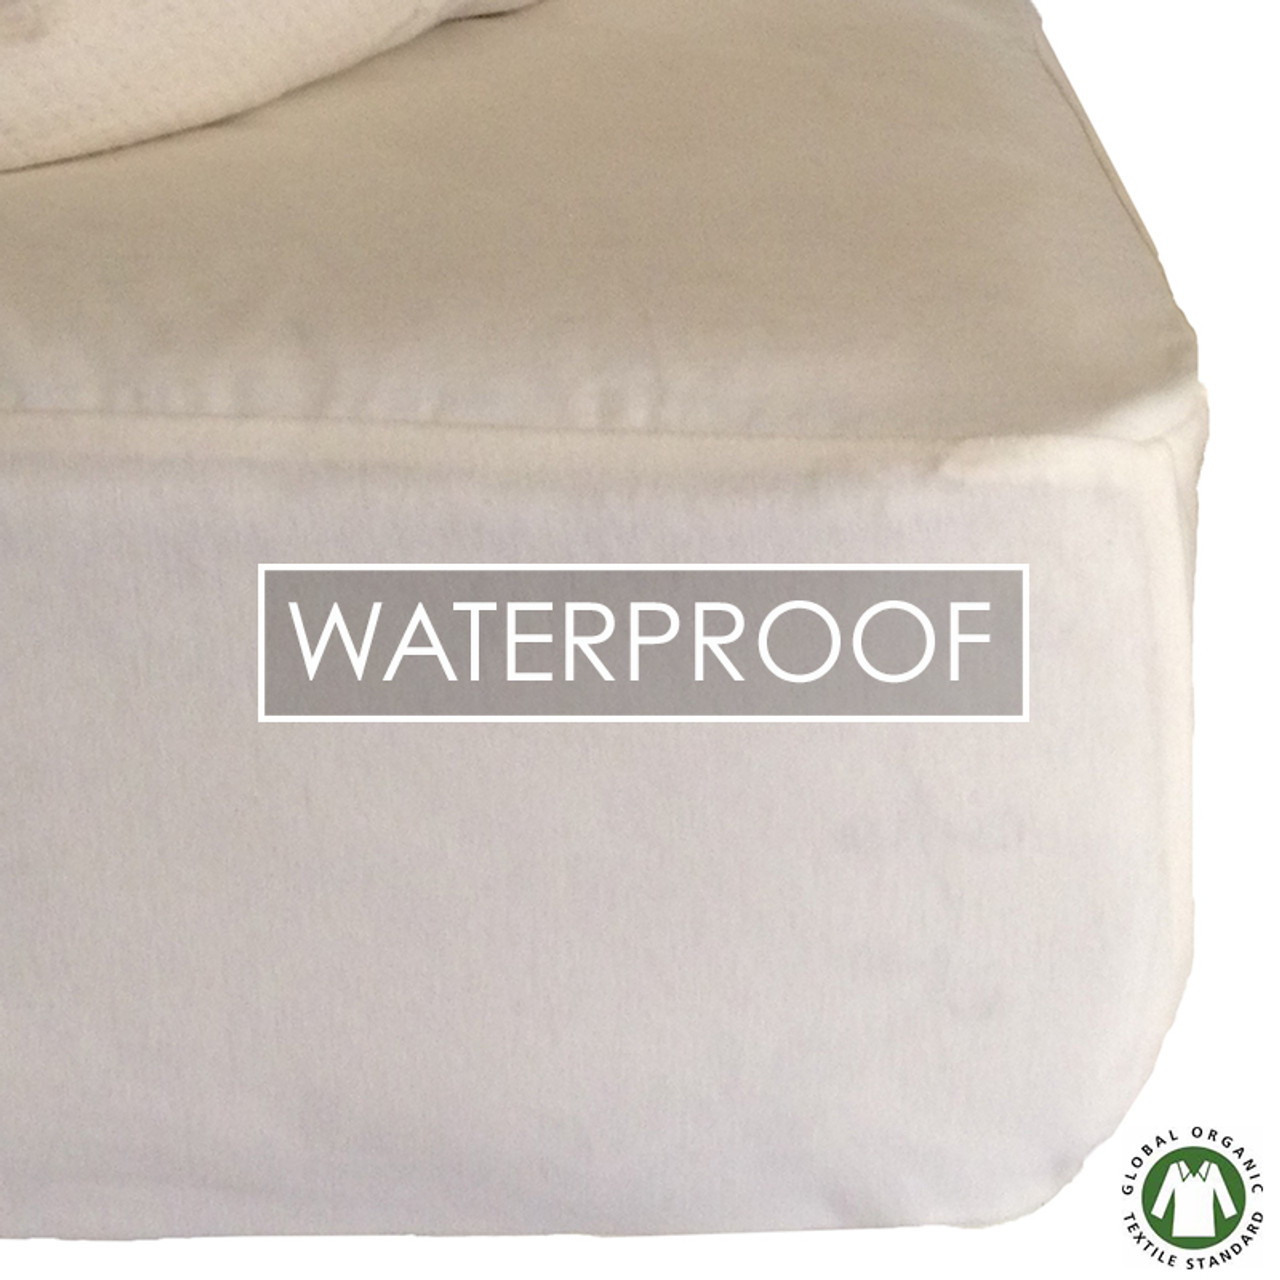 Waterproof Mattress Protector Fitted Sheet